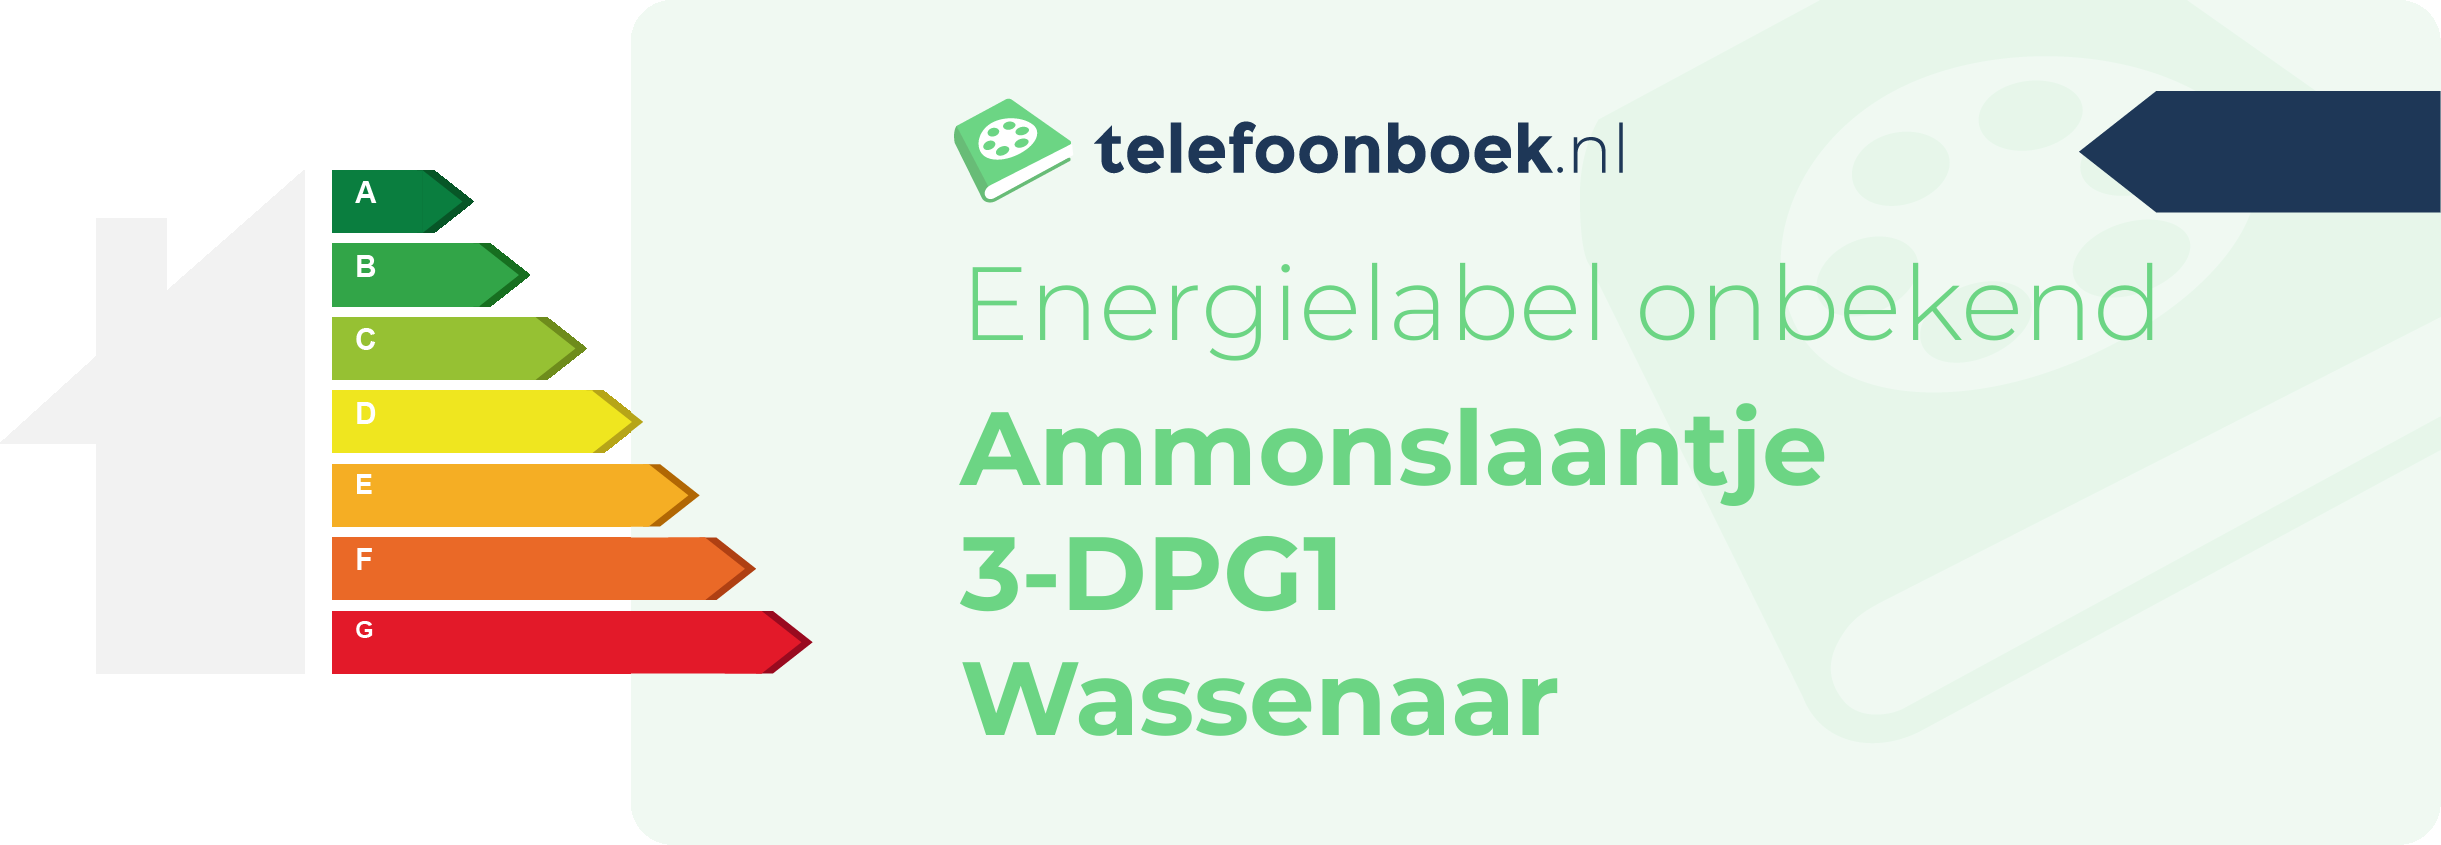 Energielabel Ammonslaantje 3-DPG1 Wassenaar